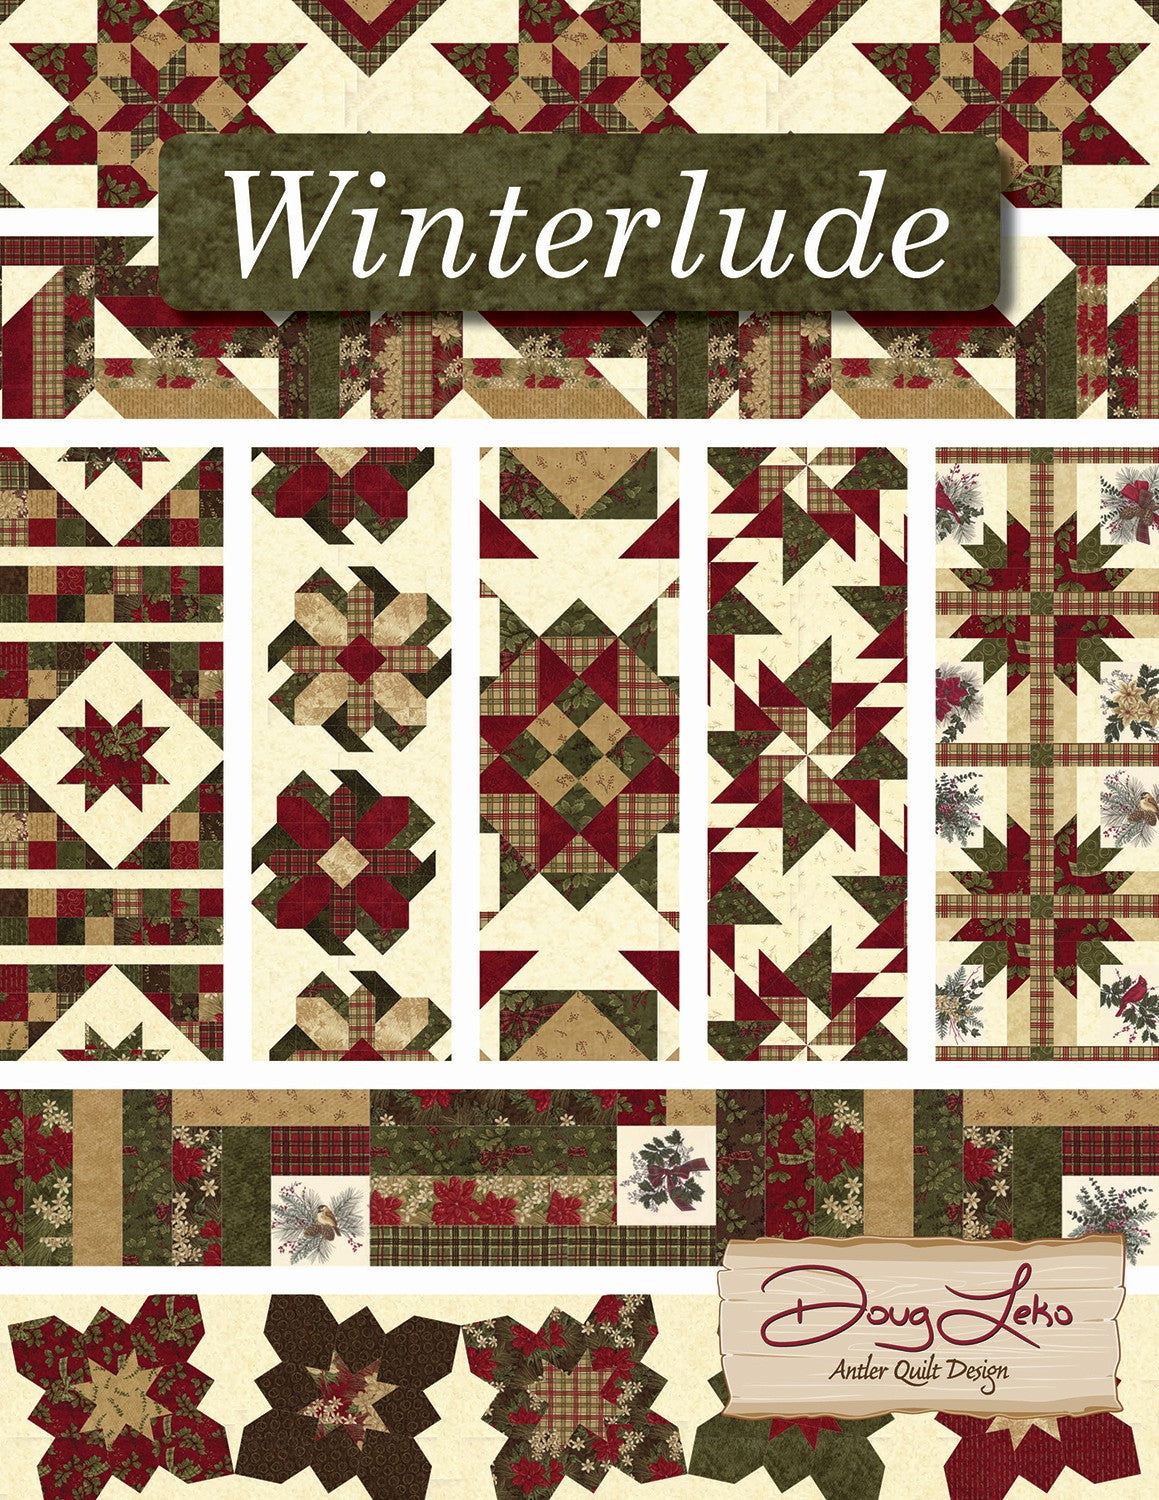 Winterlude Quilt Pattern Book by Doug Leko of Antler Quilt Designs